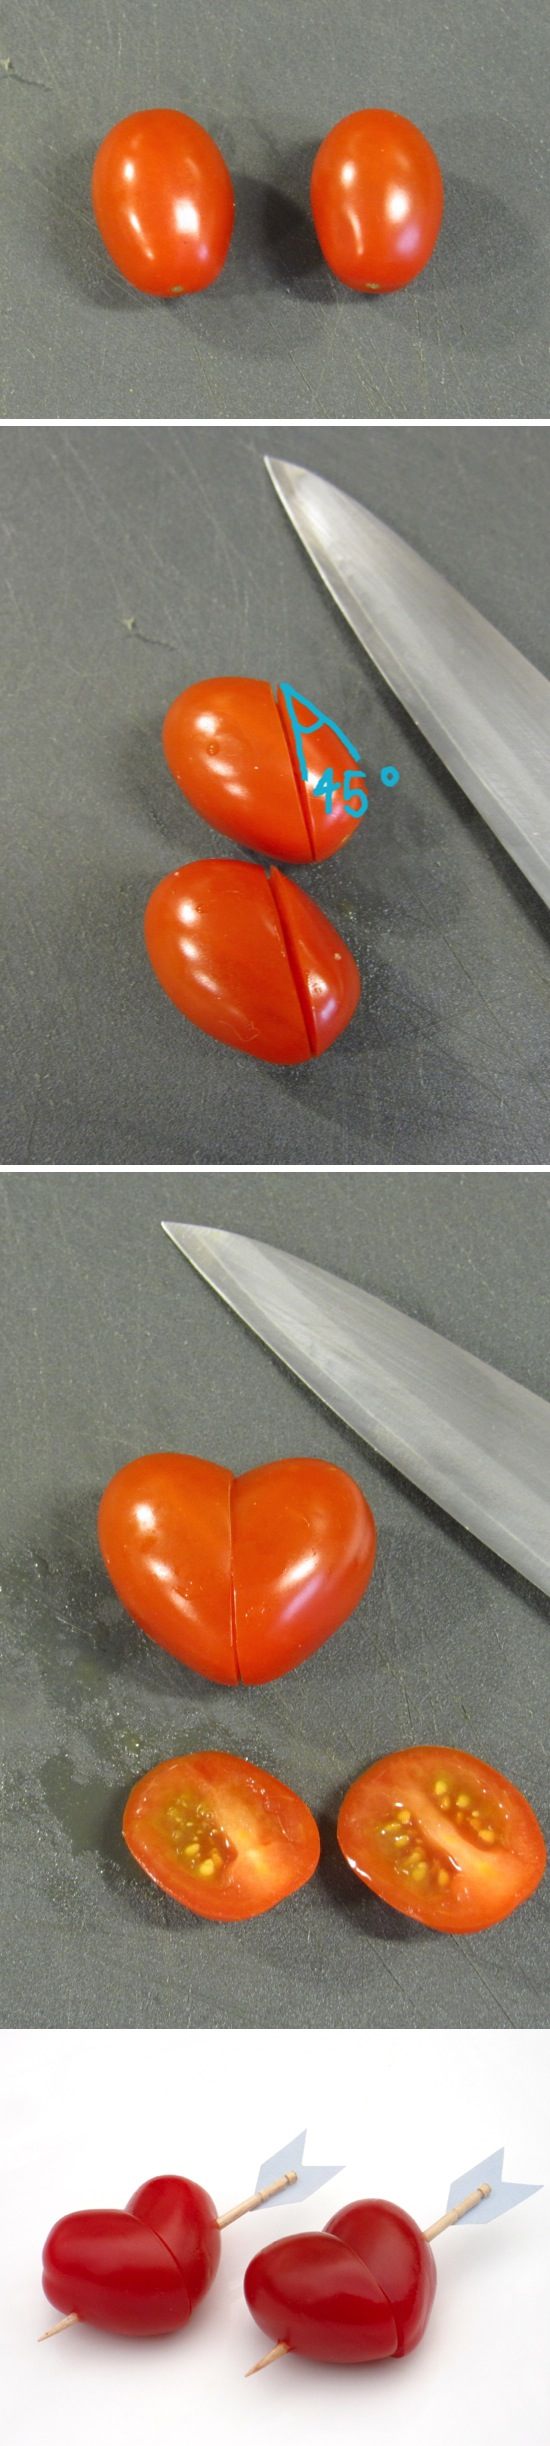 4-cherry-tomato-hearts